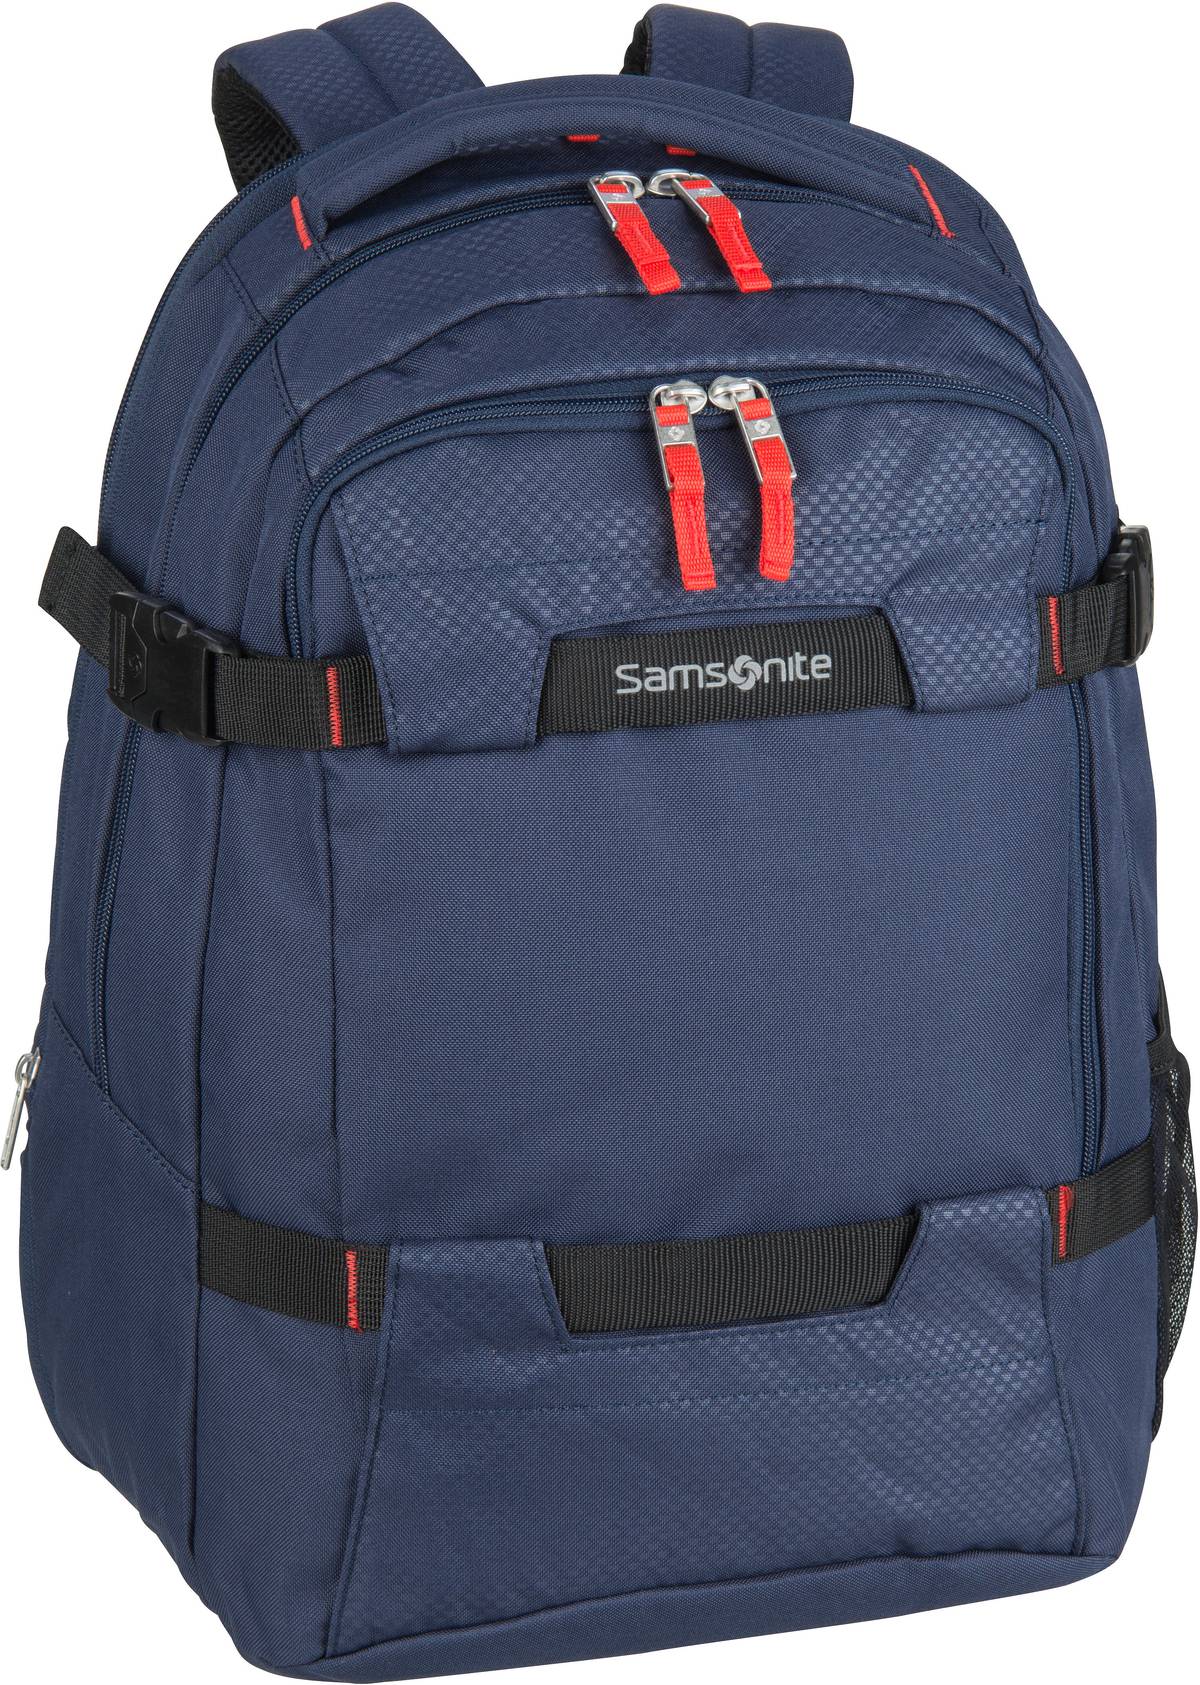 Samsonite Samsonite Sonora Laptop Backpack L exp in Navy (31 Liter), Rucksack / Backpack